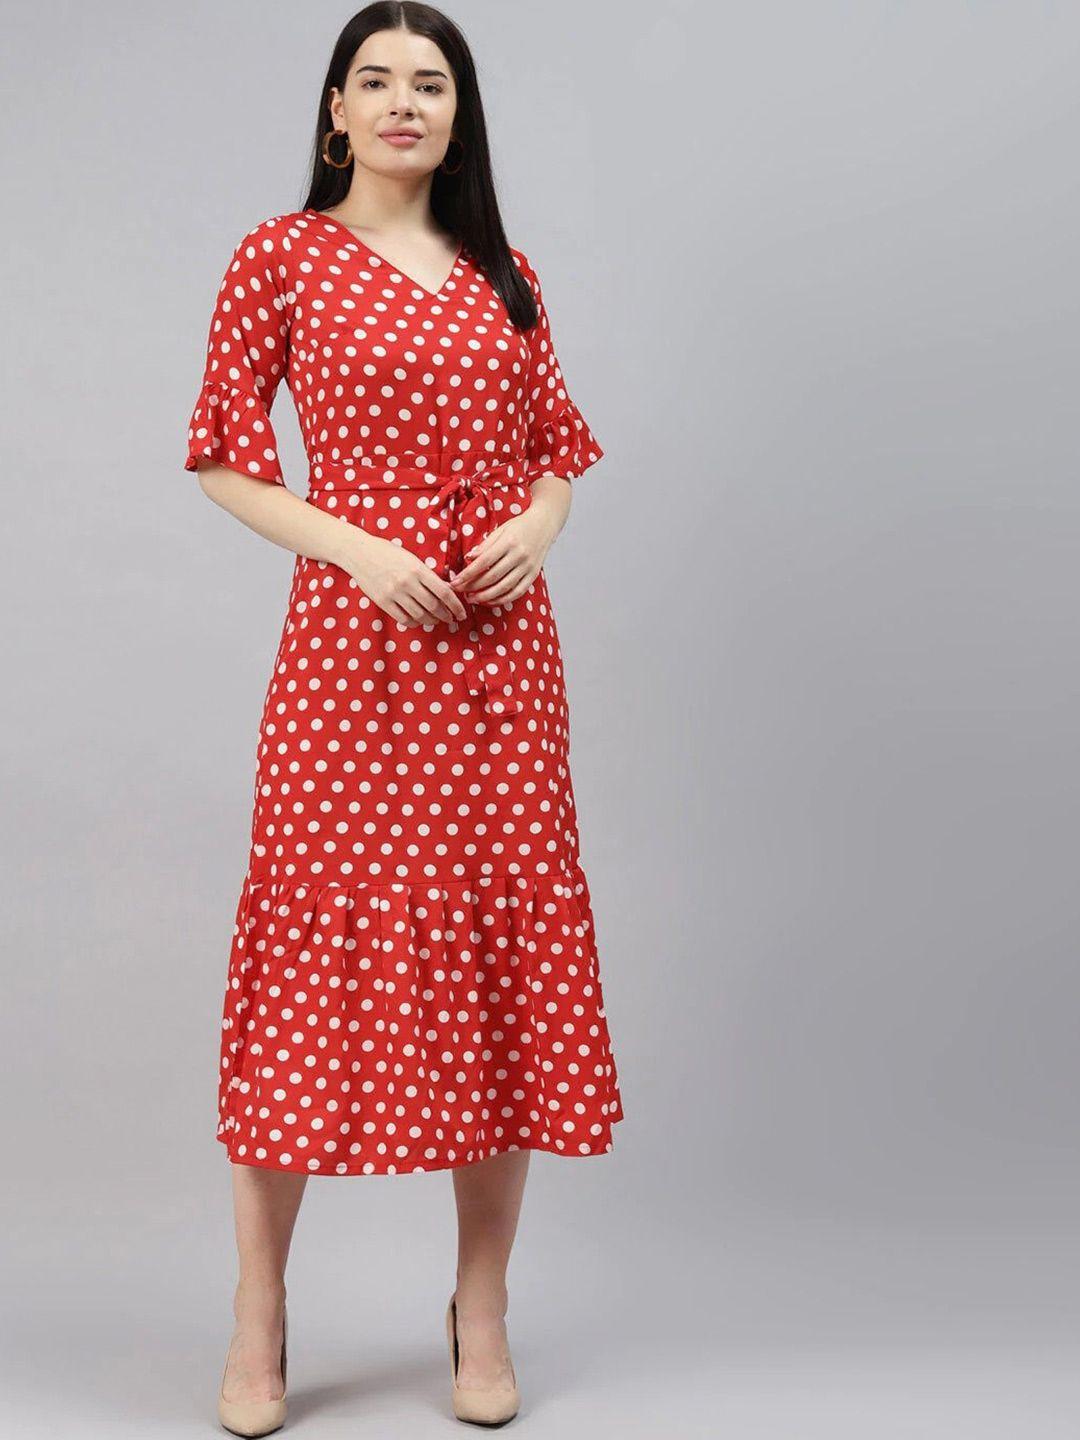 sleek italia bell sleeves polka dot printed crepe a-line dress